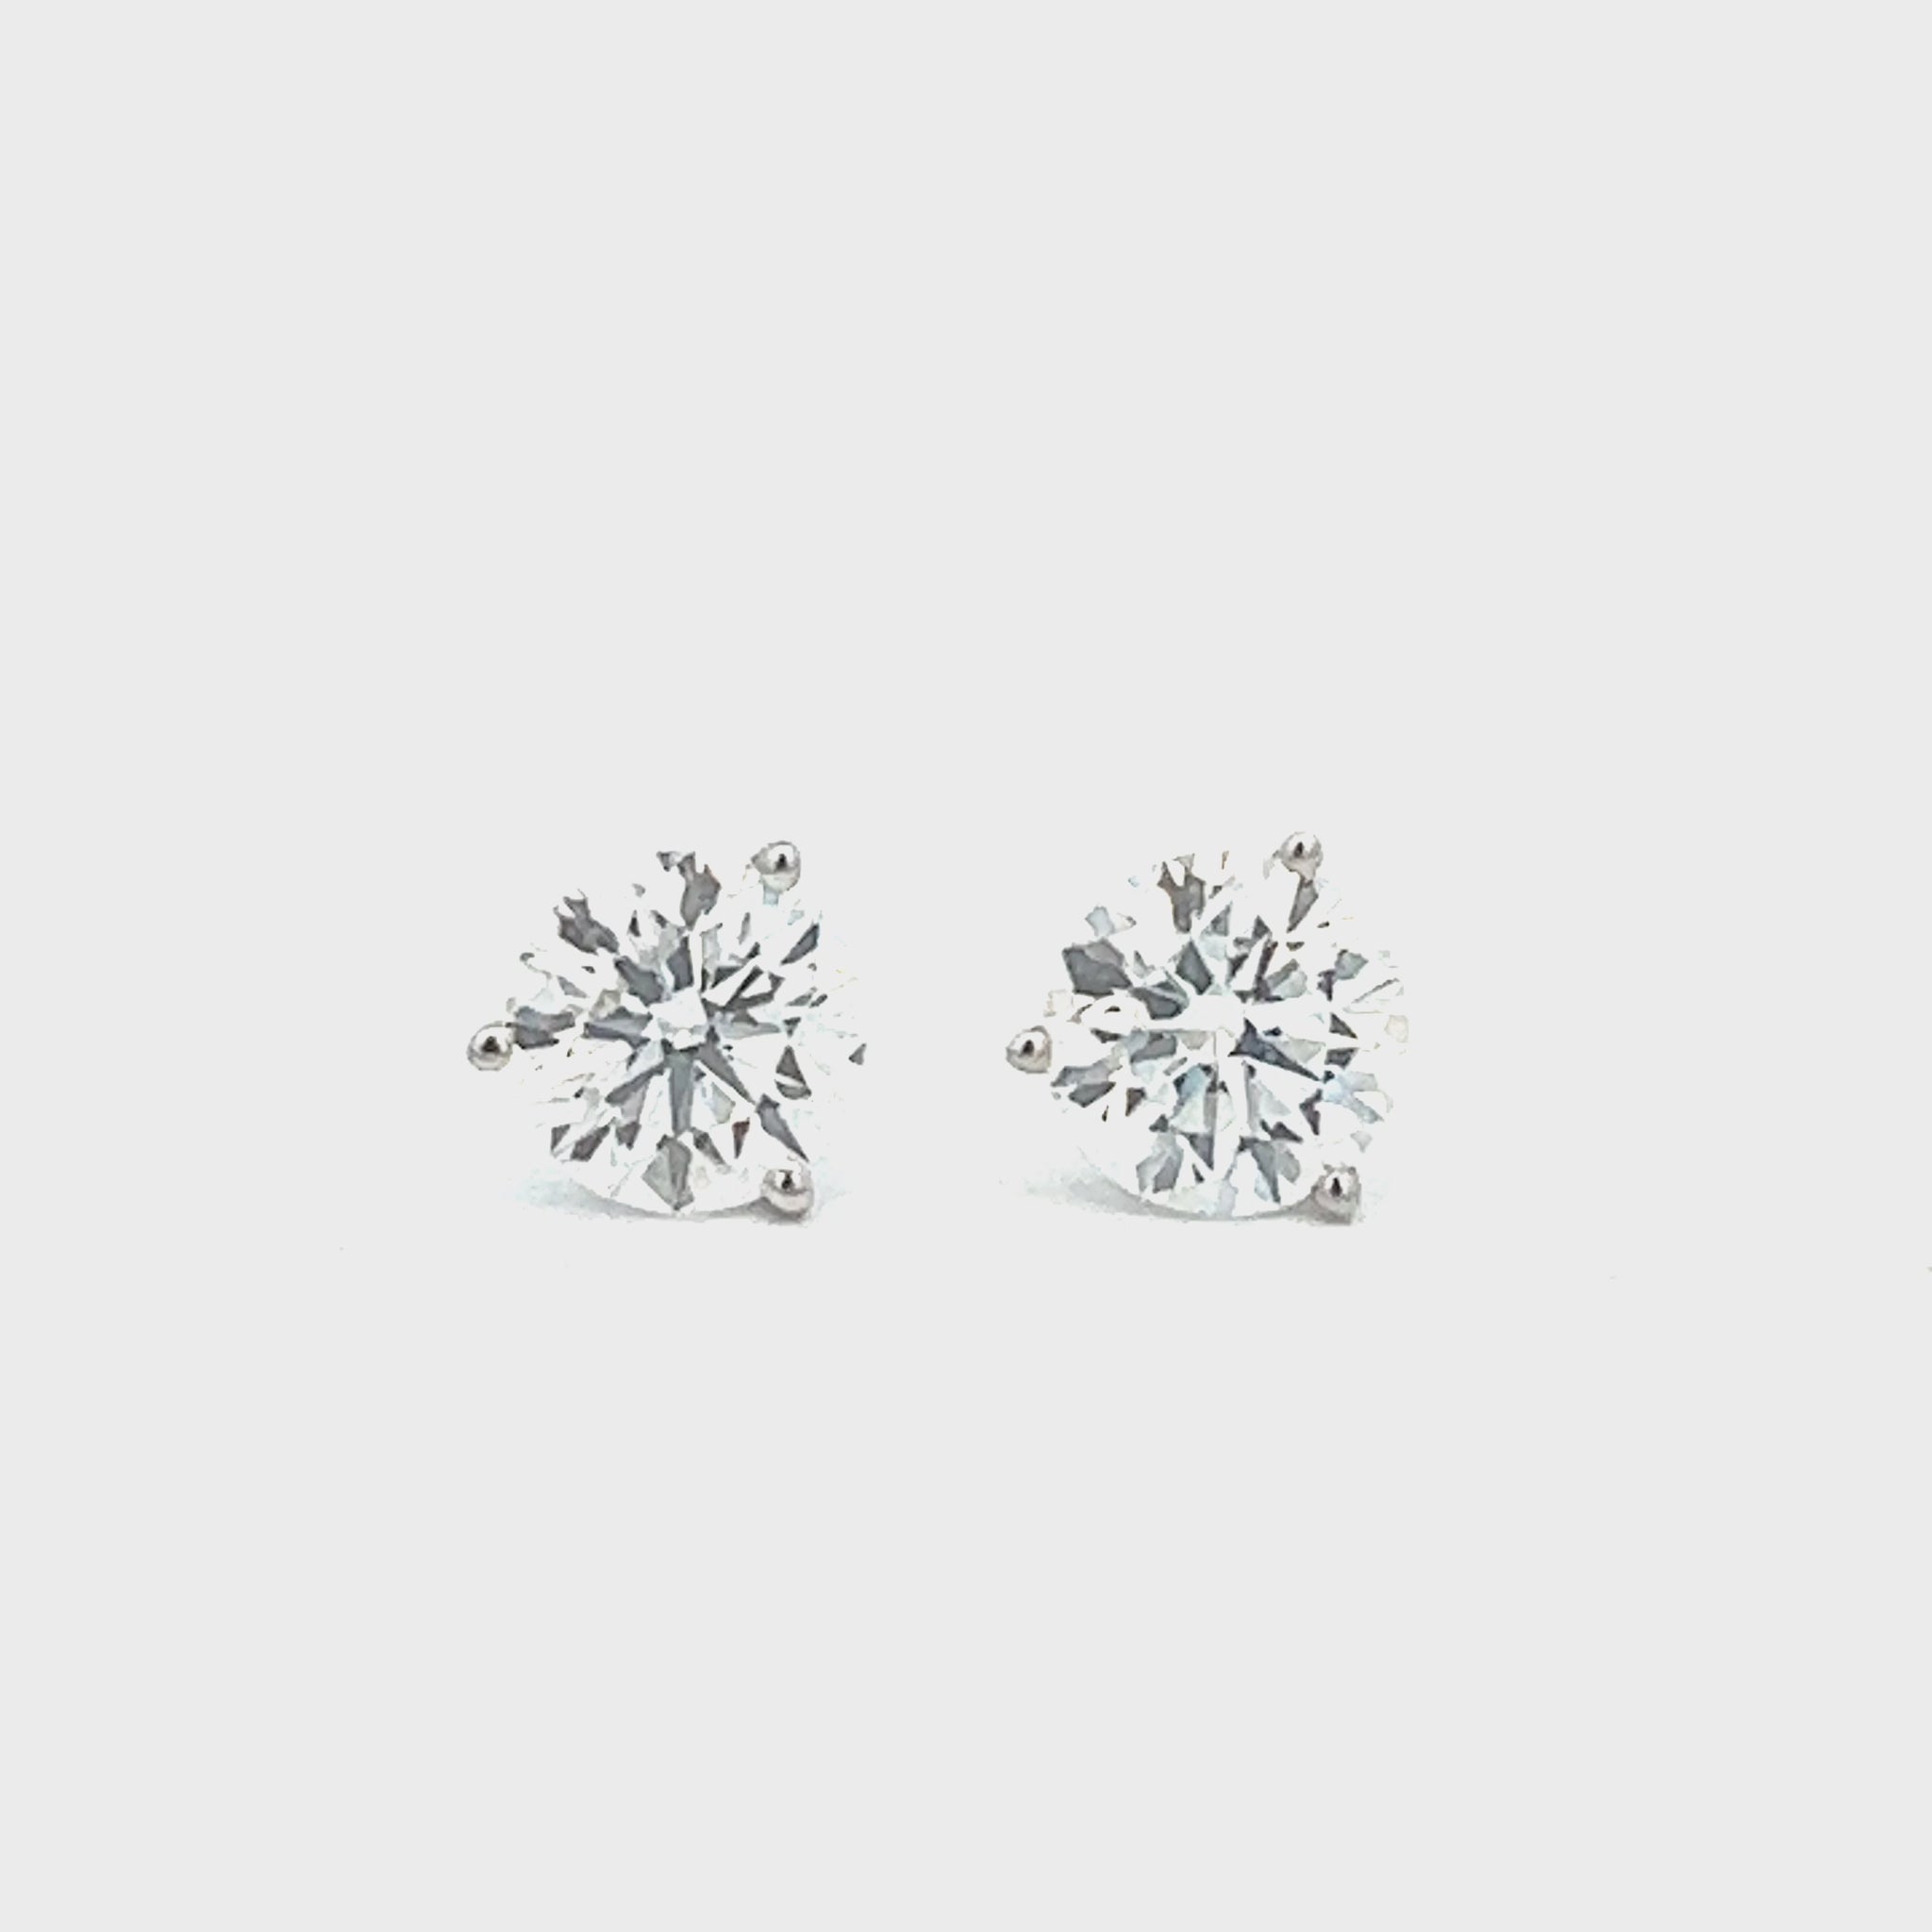 4 Carat Diamond Stud Earrings | 14k White Gold Video